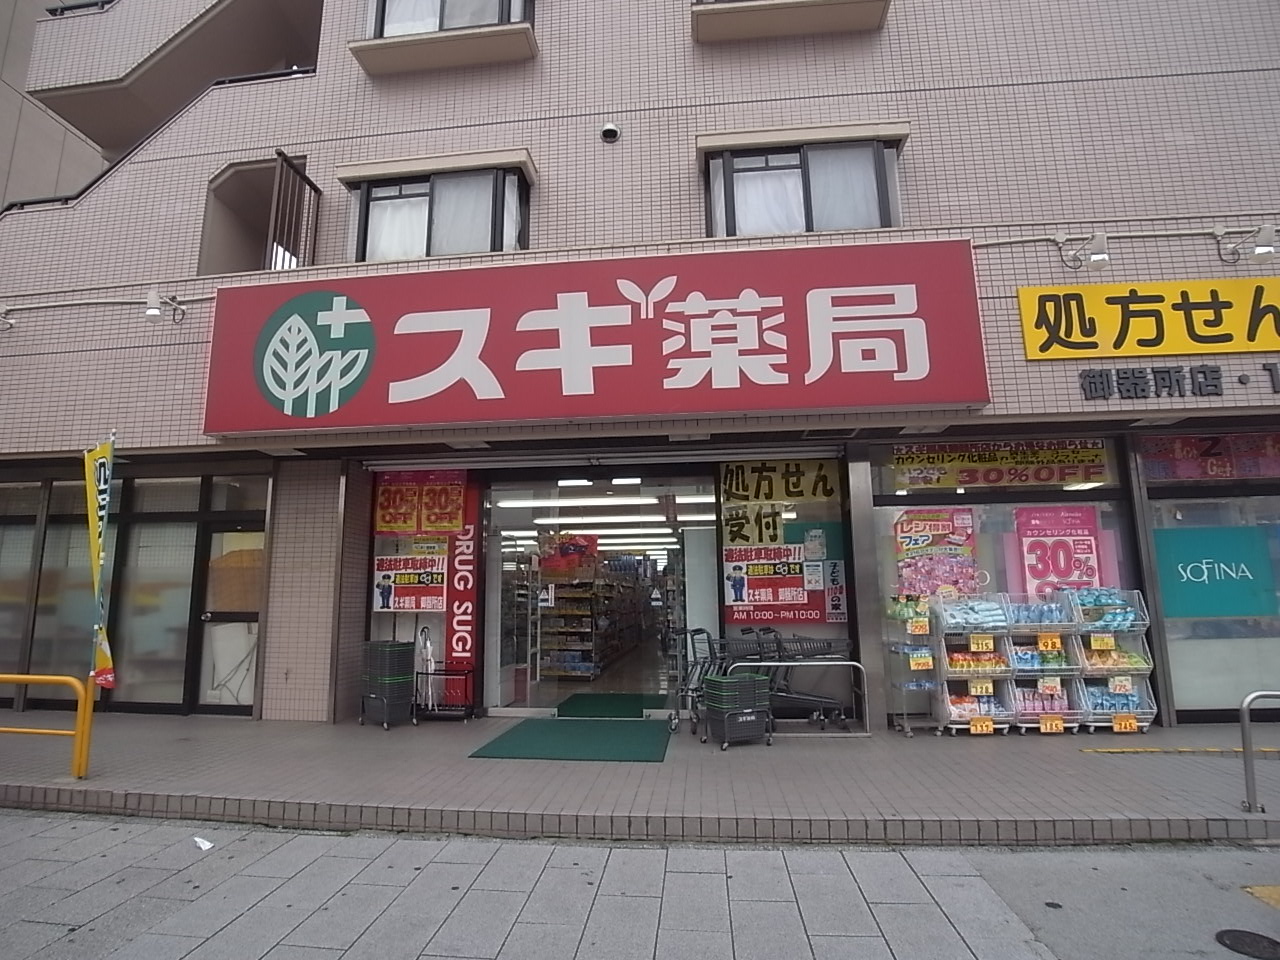 Dorakkusutoa. Cedar pharmacy Gokisho shop 284m until (drugstore)